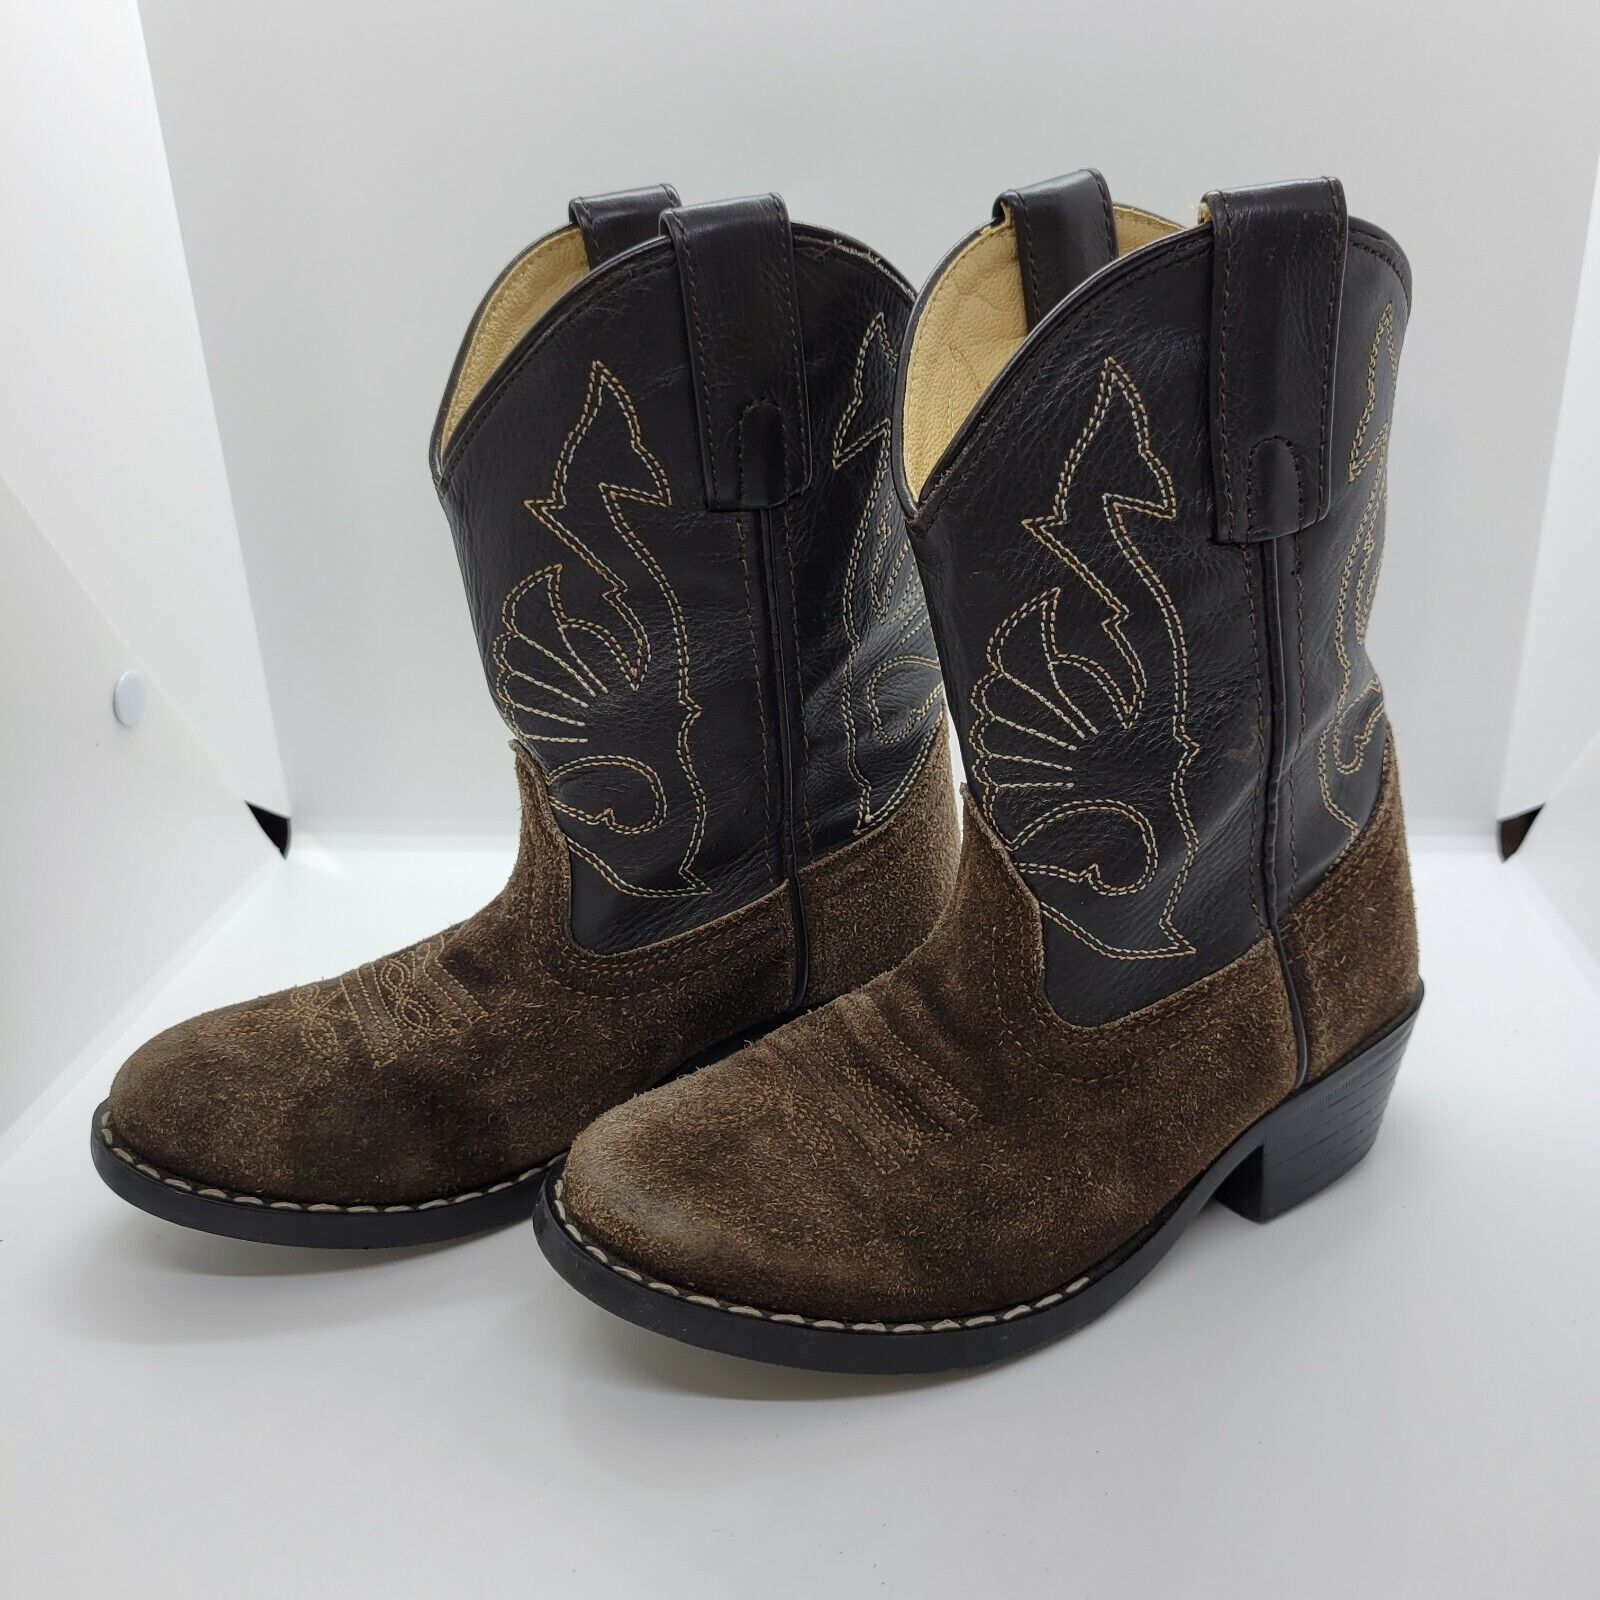 Masterson Boot Co. Brown Cowboy Boots Size Little Boys 12M